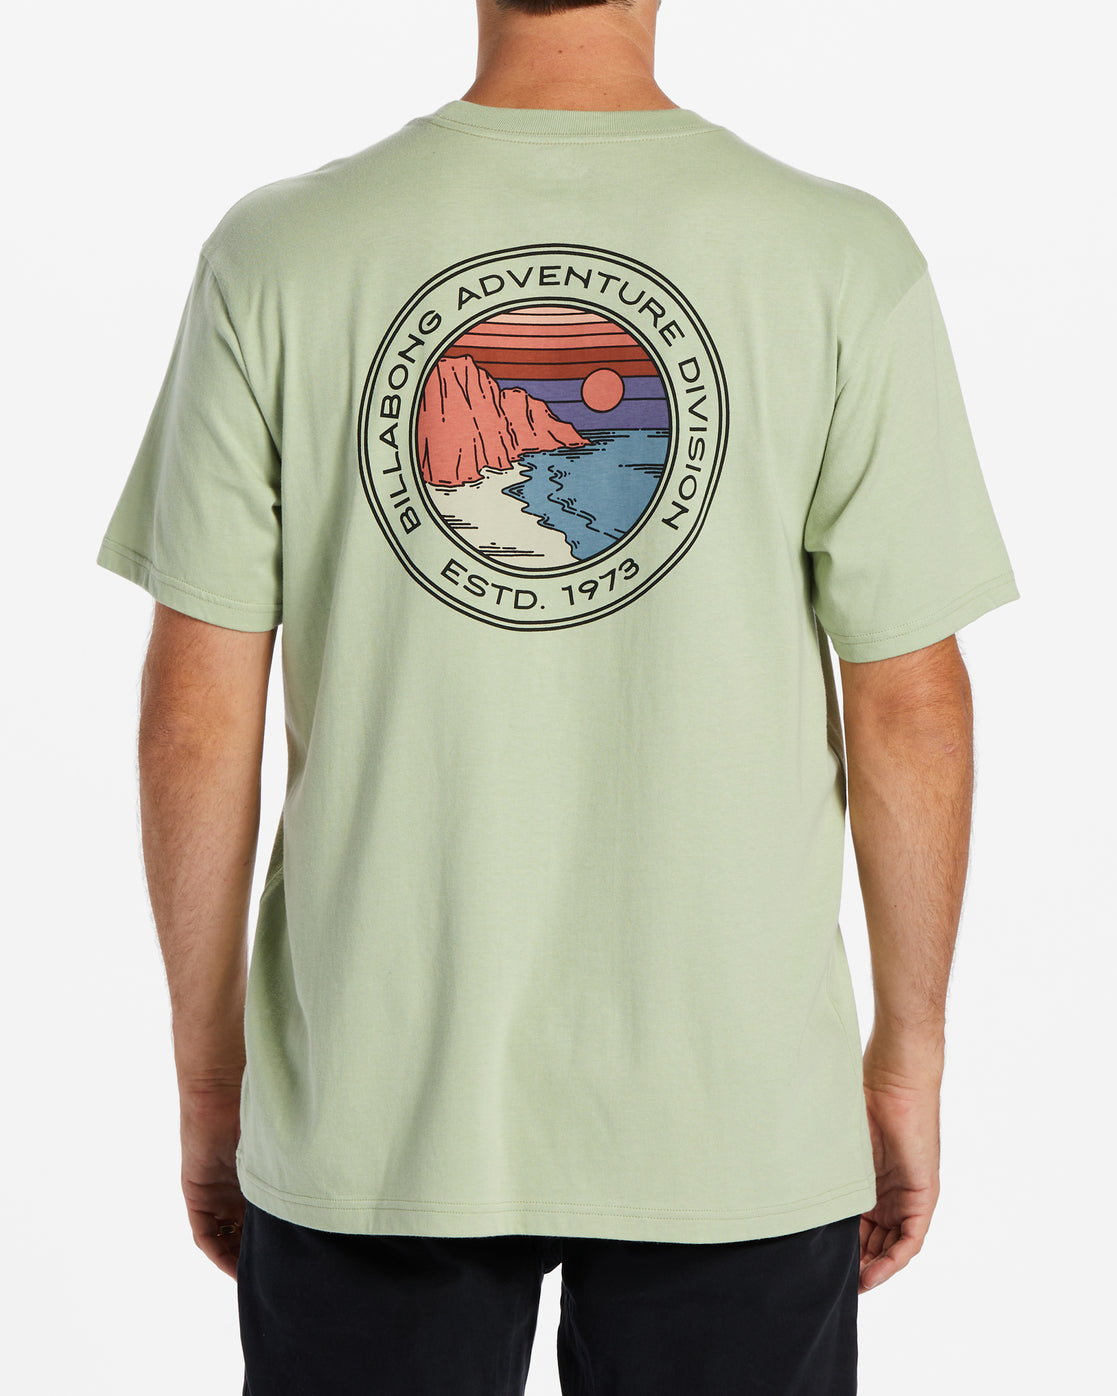 Rockies T-Shirt